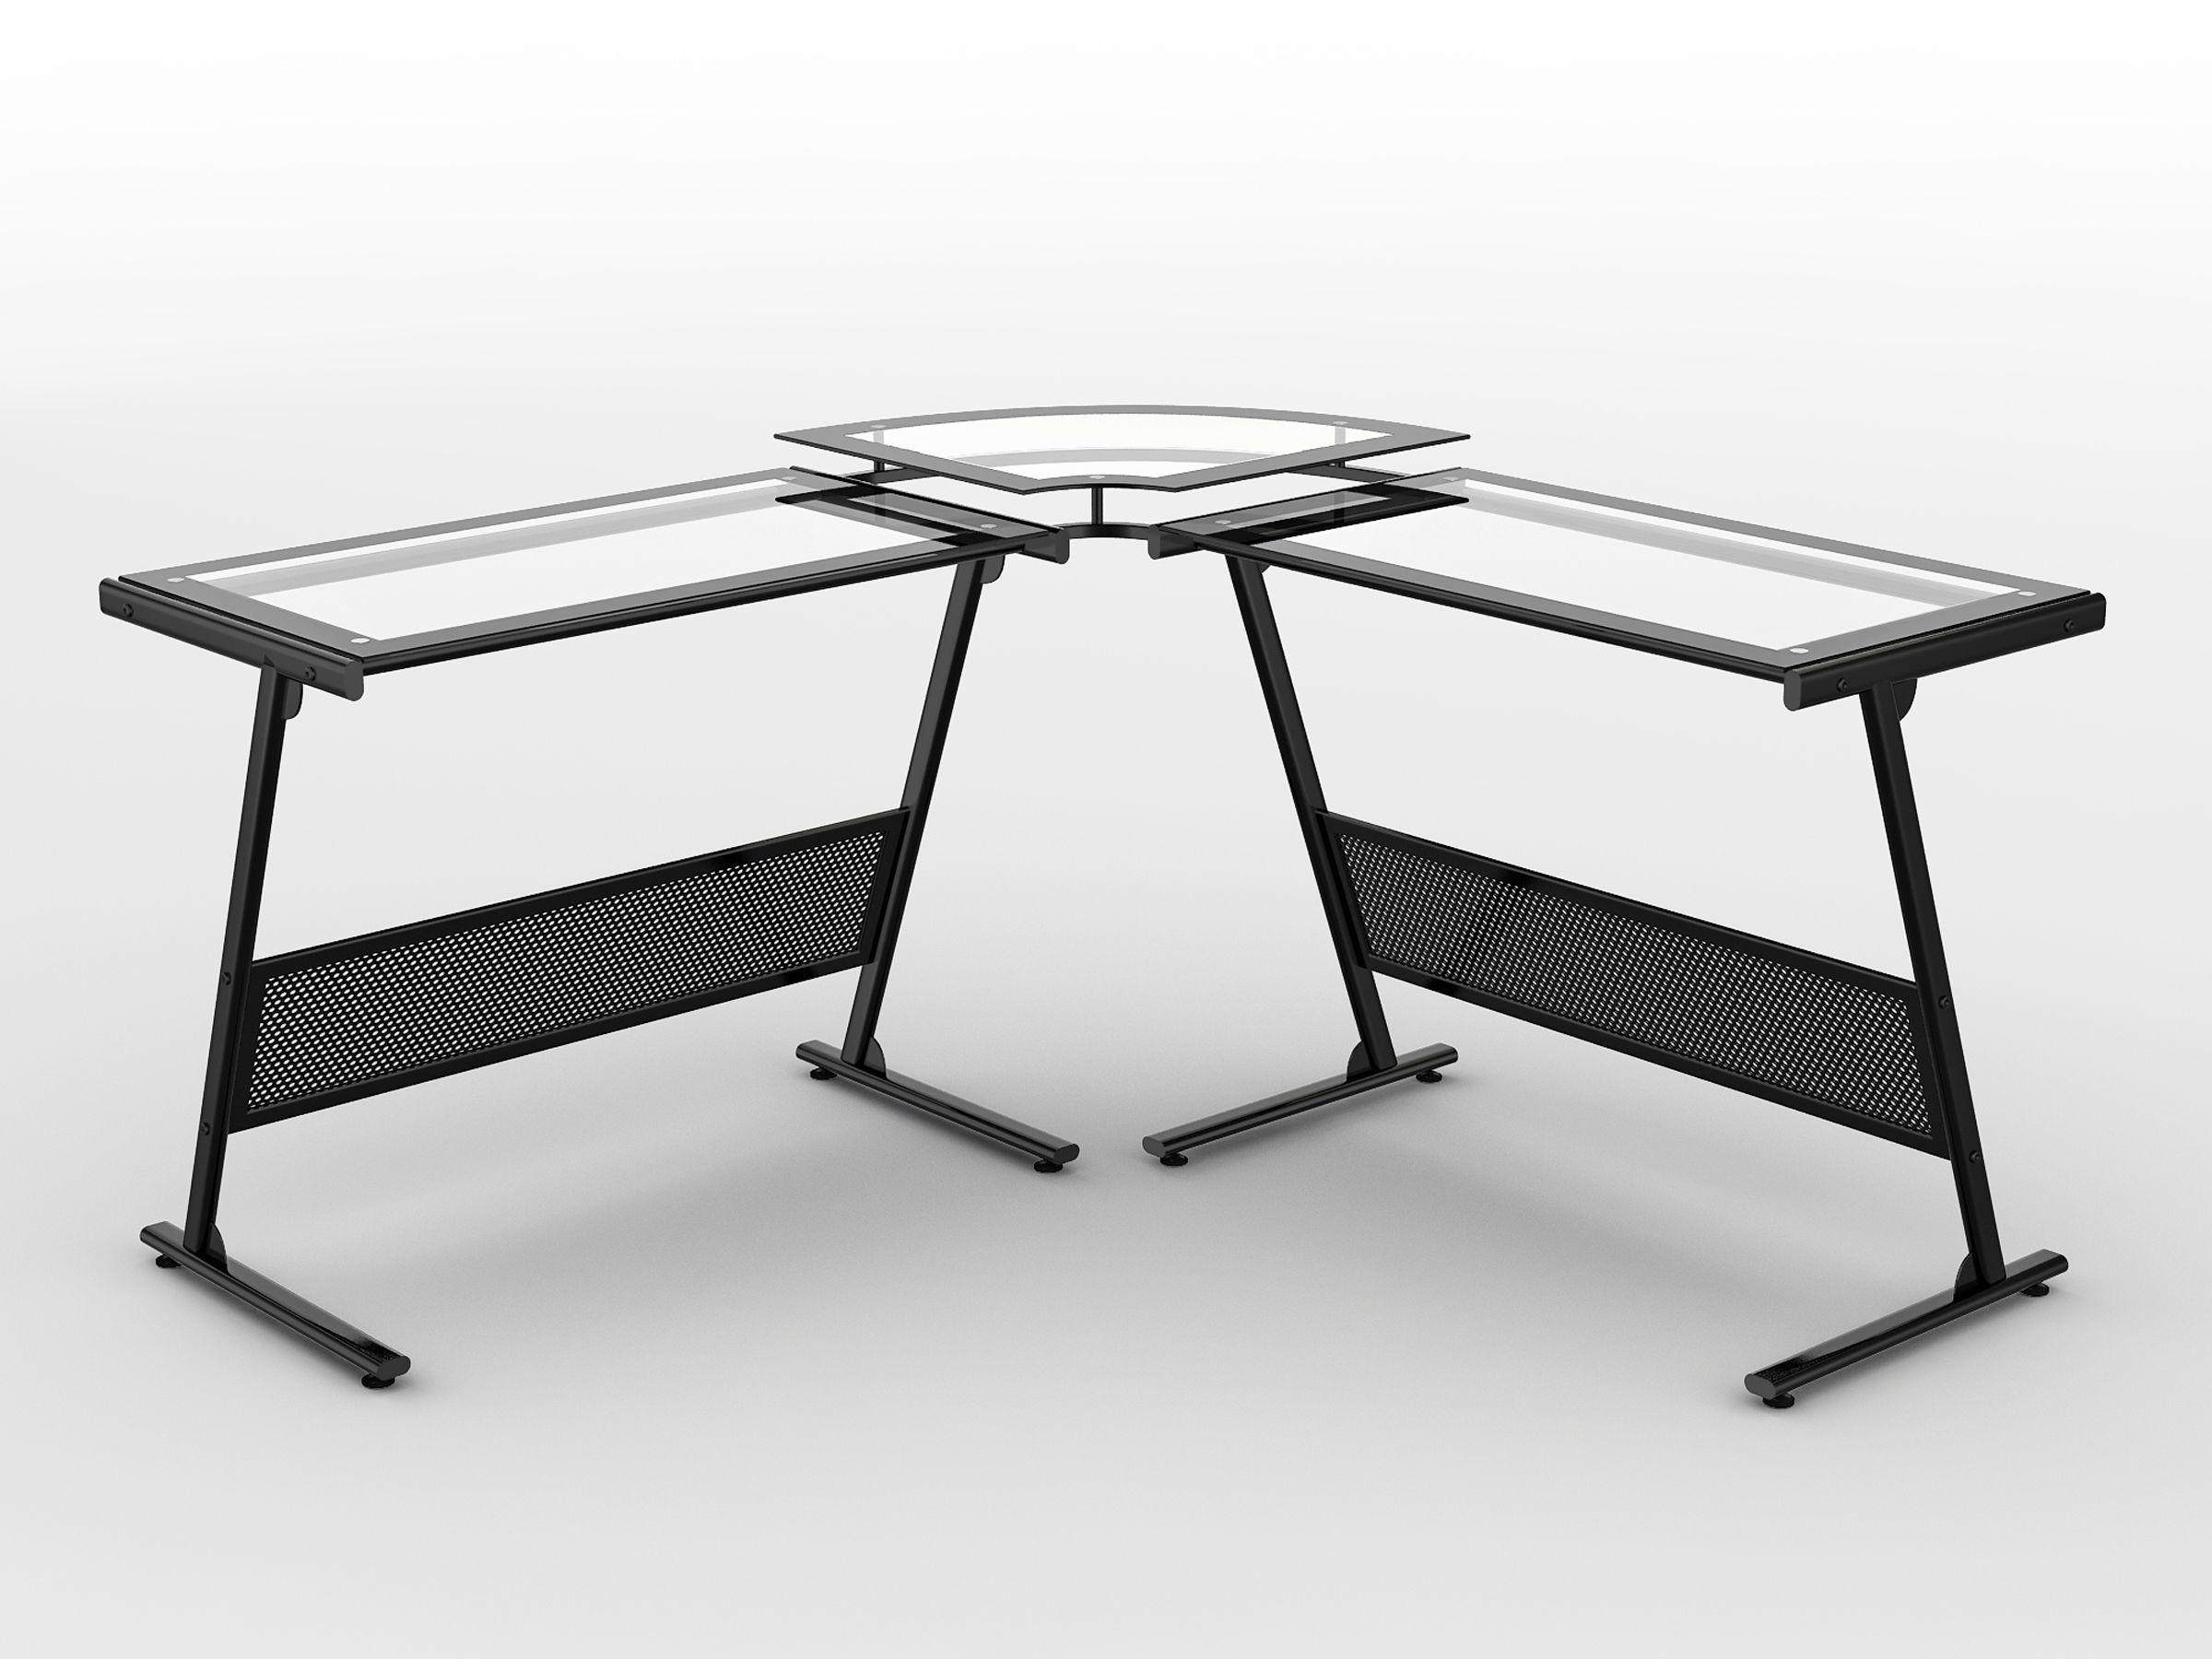 2019 Computer Desk Glass Corner • Desk Ideas Pertaining To Glass Corner Computer Desks (View 2 of 20)